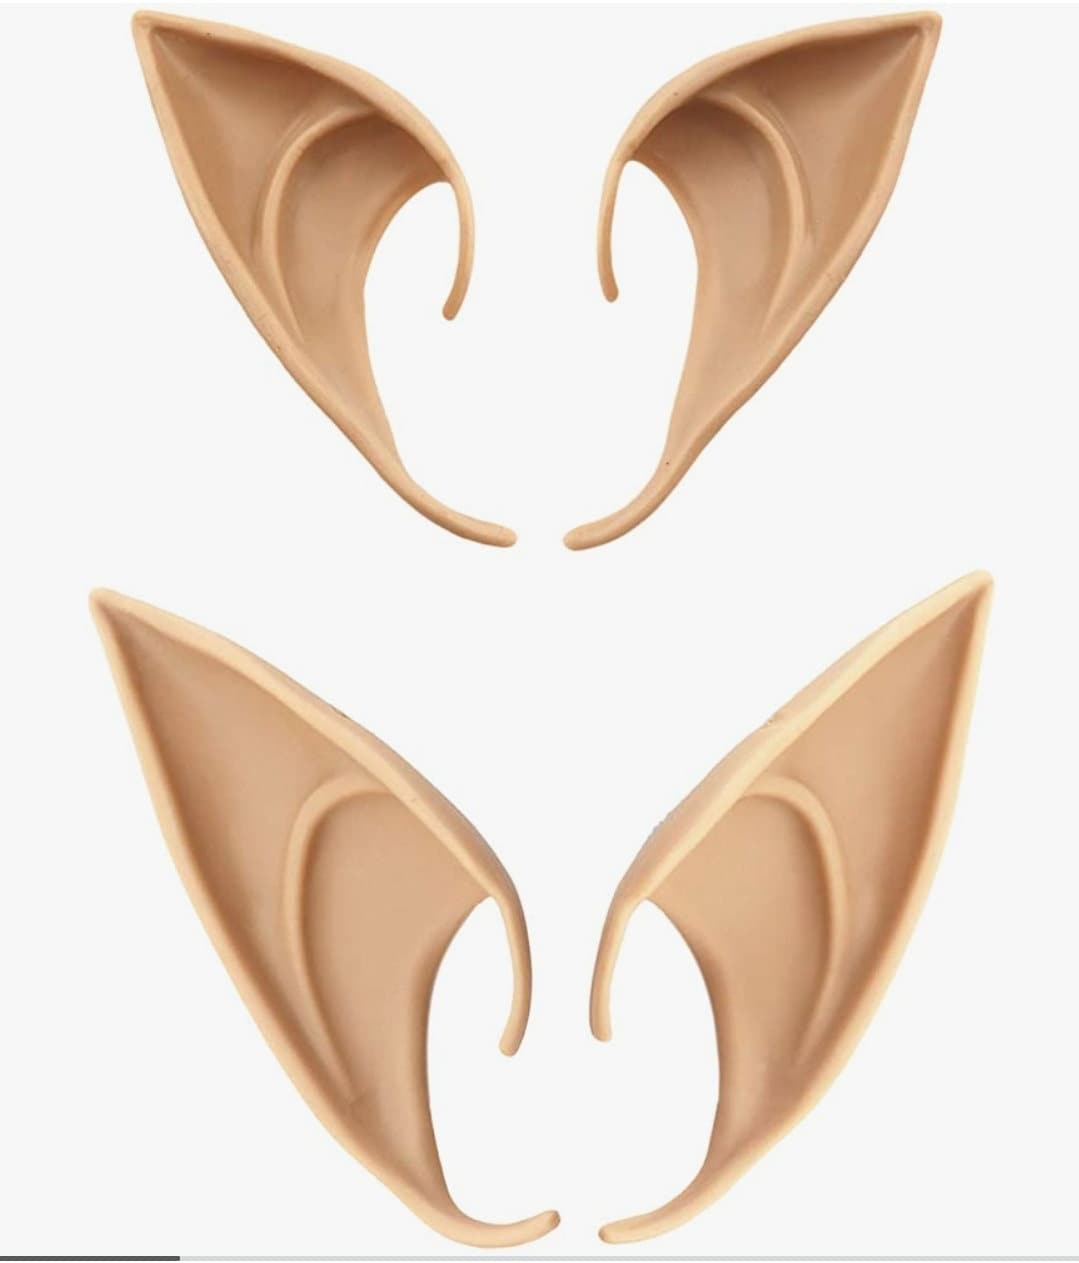 Pair Elf ears pale or tan latex flexible pointed elven faerie anime cosplay fantasy